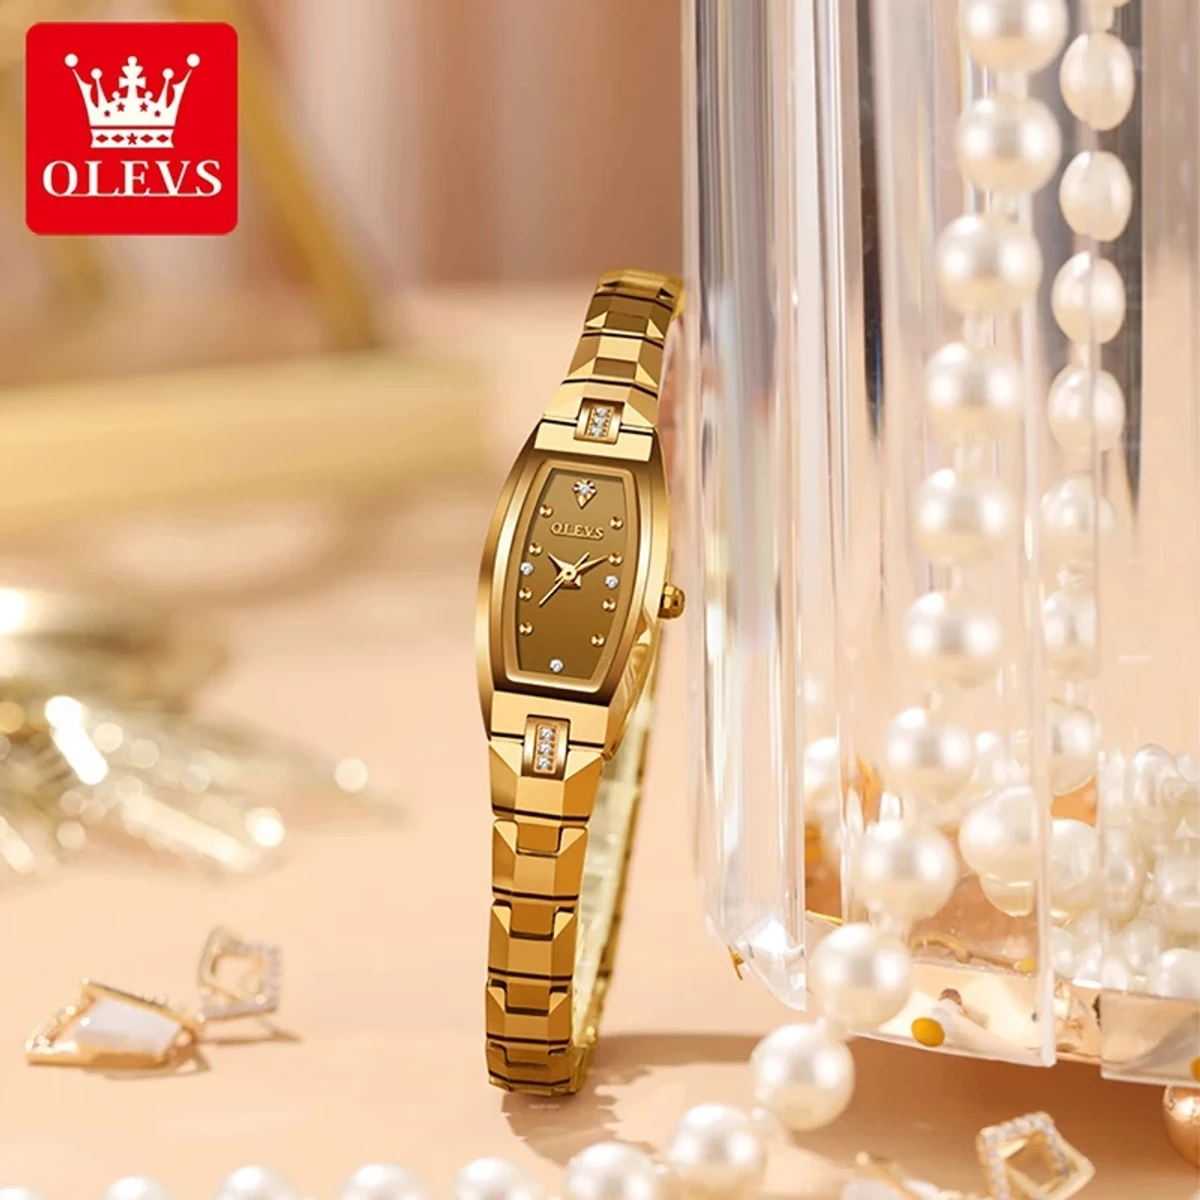 OLEVS Luxury Watches for Women Rose Gold Bracelet Gift Set Waterproof Jewelry Wrist Watch Ladies Girls Watch Clock Montre WOMEN OLEVS WATCH MODEL 5501  - GOLDEN COOLER WATCH